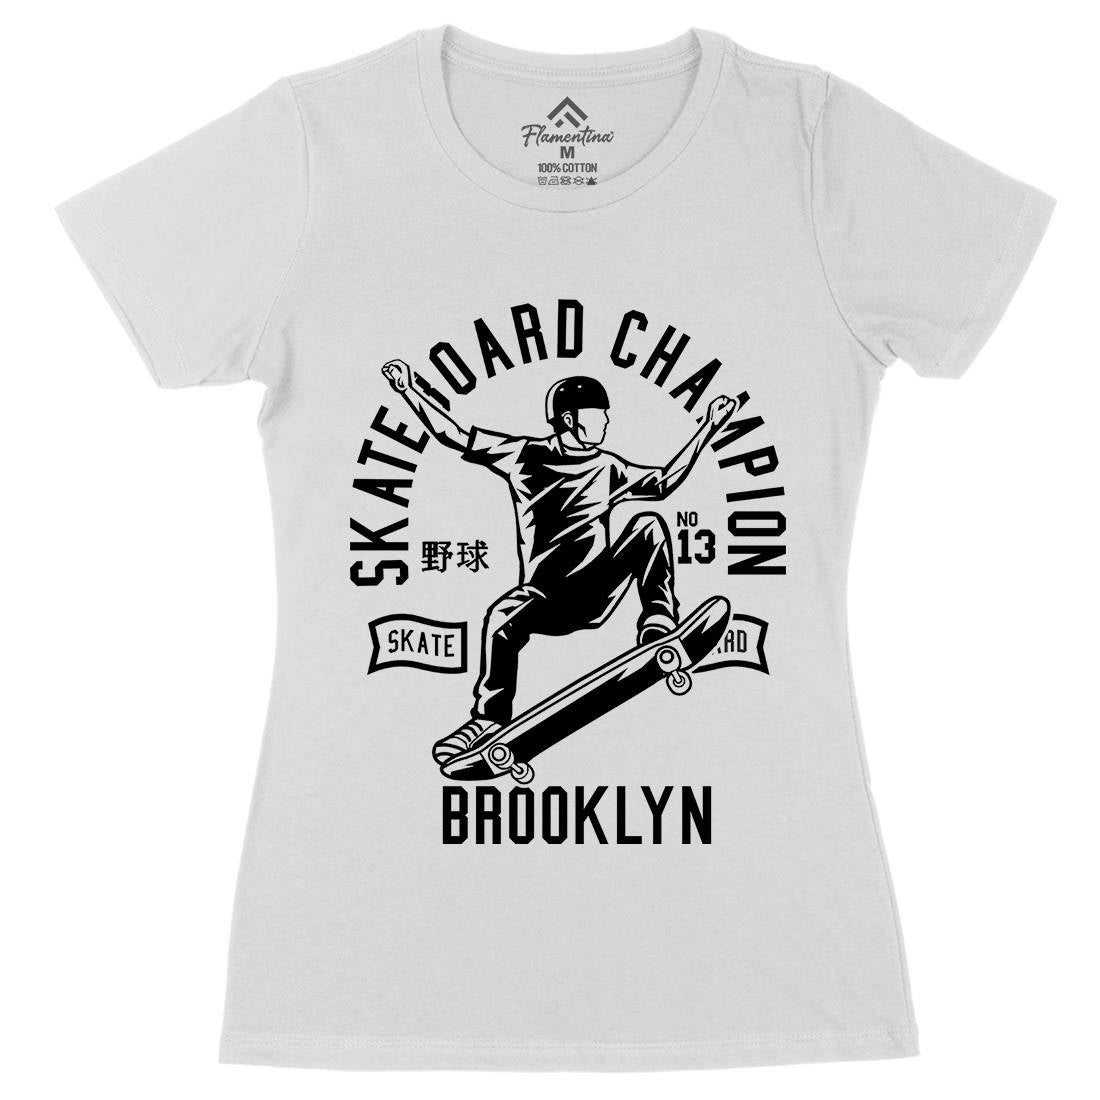 Skateboard Champion Womens Organic Crew Neck T-Shirt Skate B622